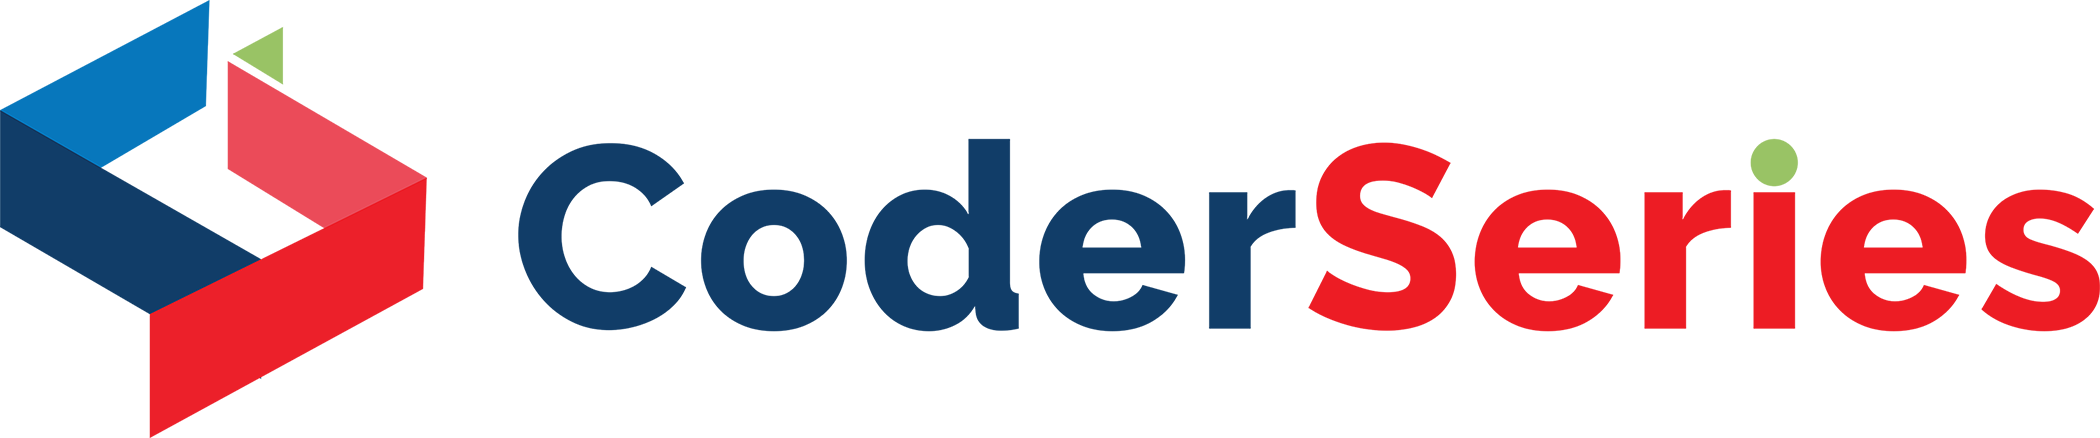 Coder Series logo